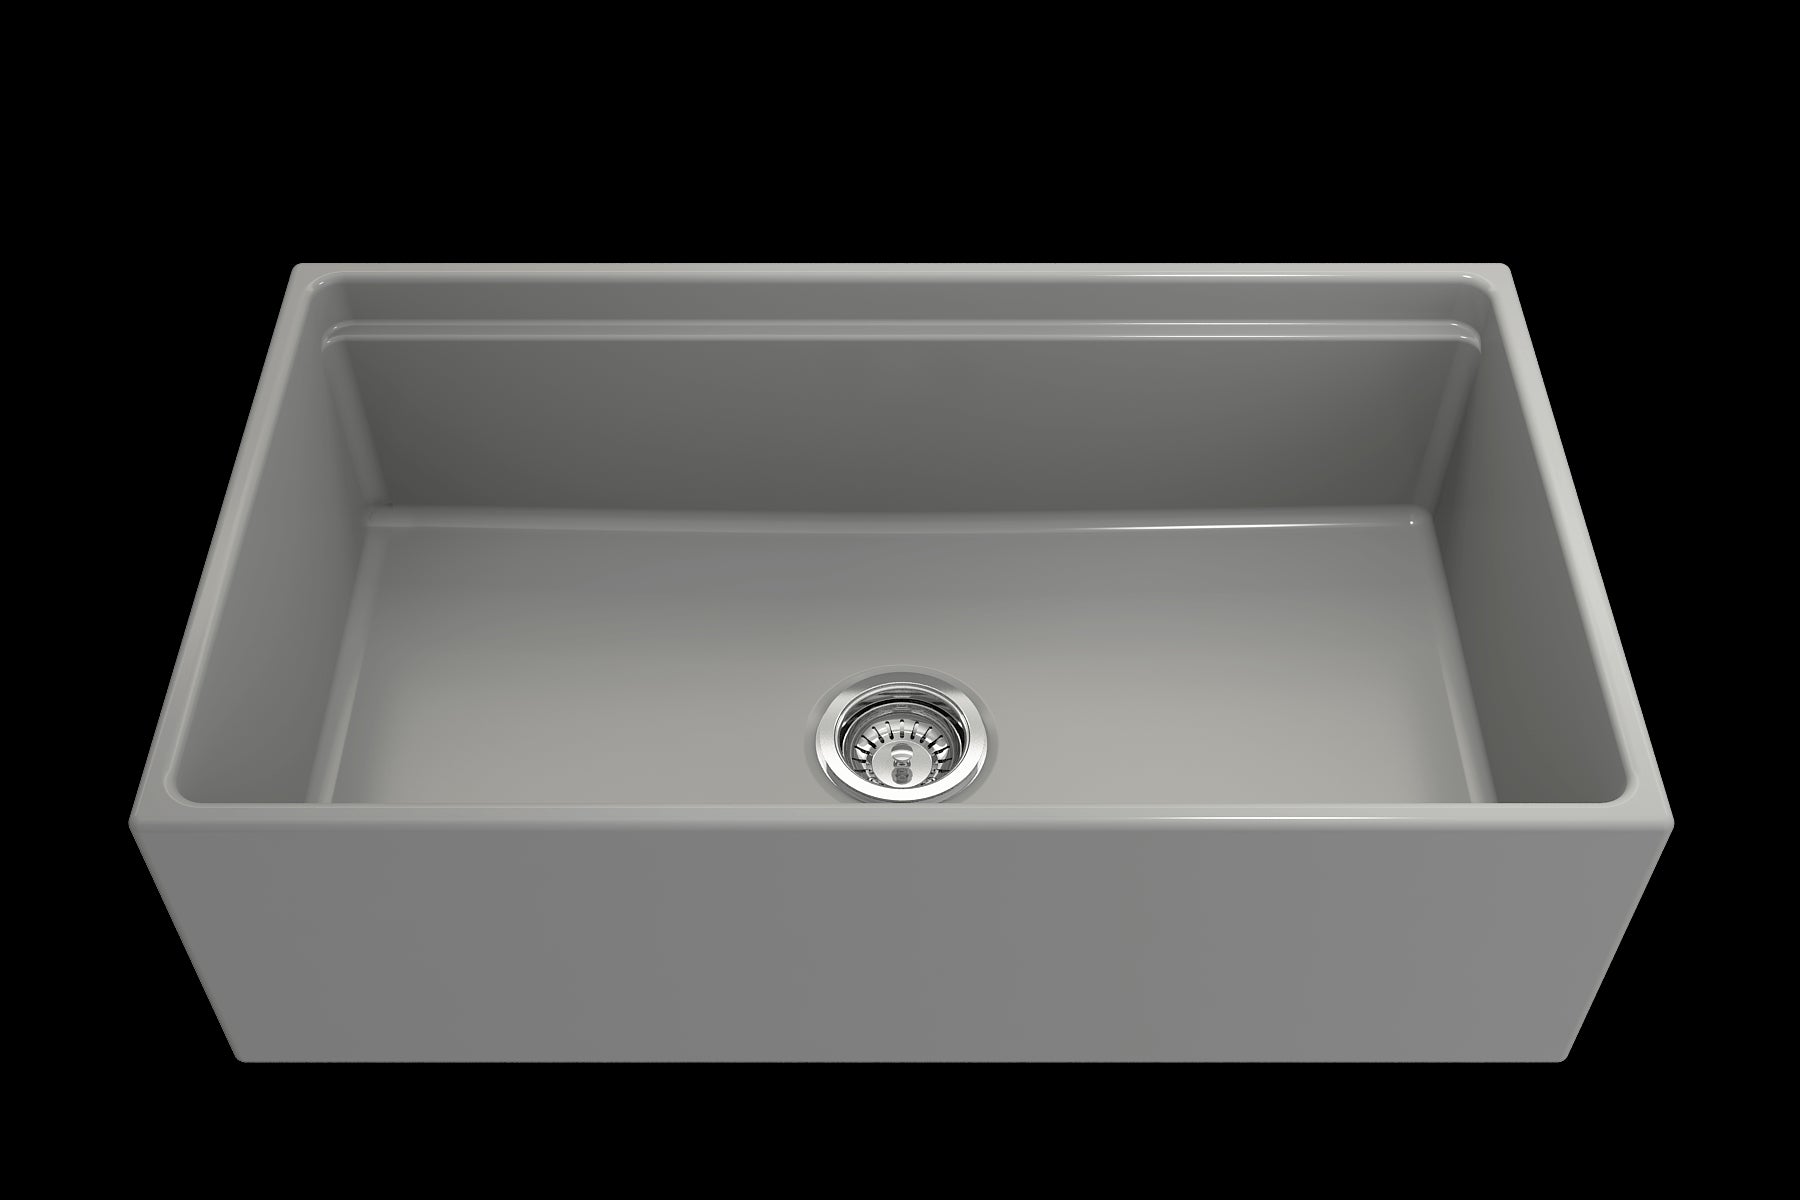 Stainless Steel Single Bowl Kitchen Sink & Accessories